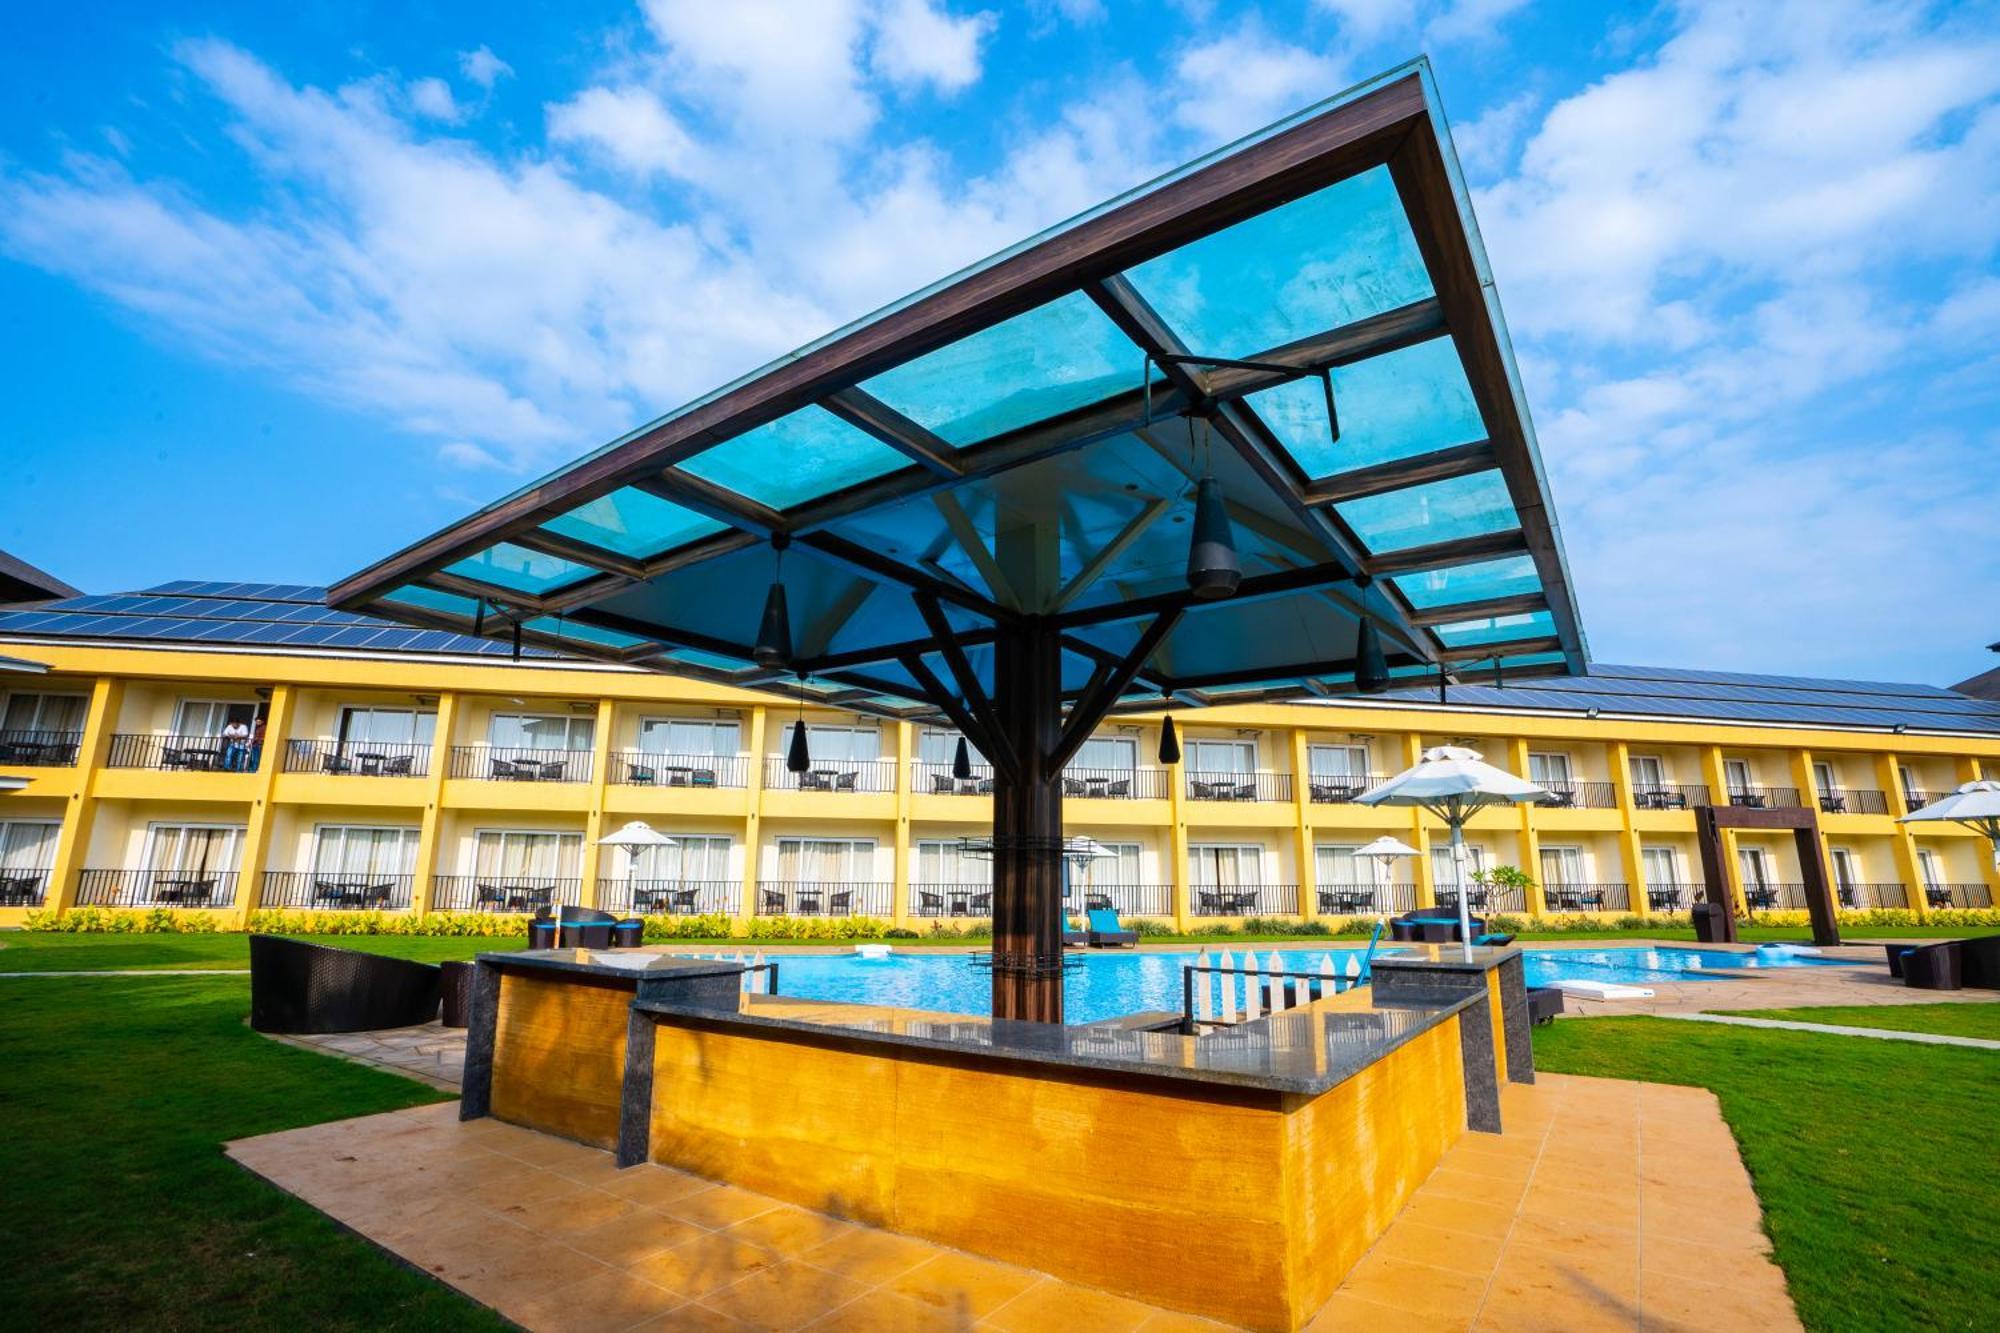 Tropical Retreat Luxury Spa & Resort Igatpuri Exterior photo